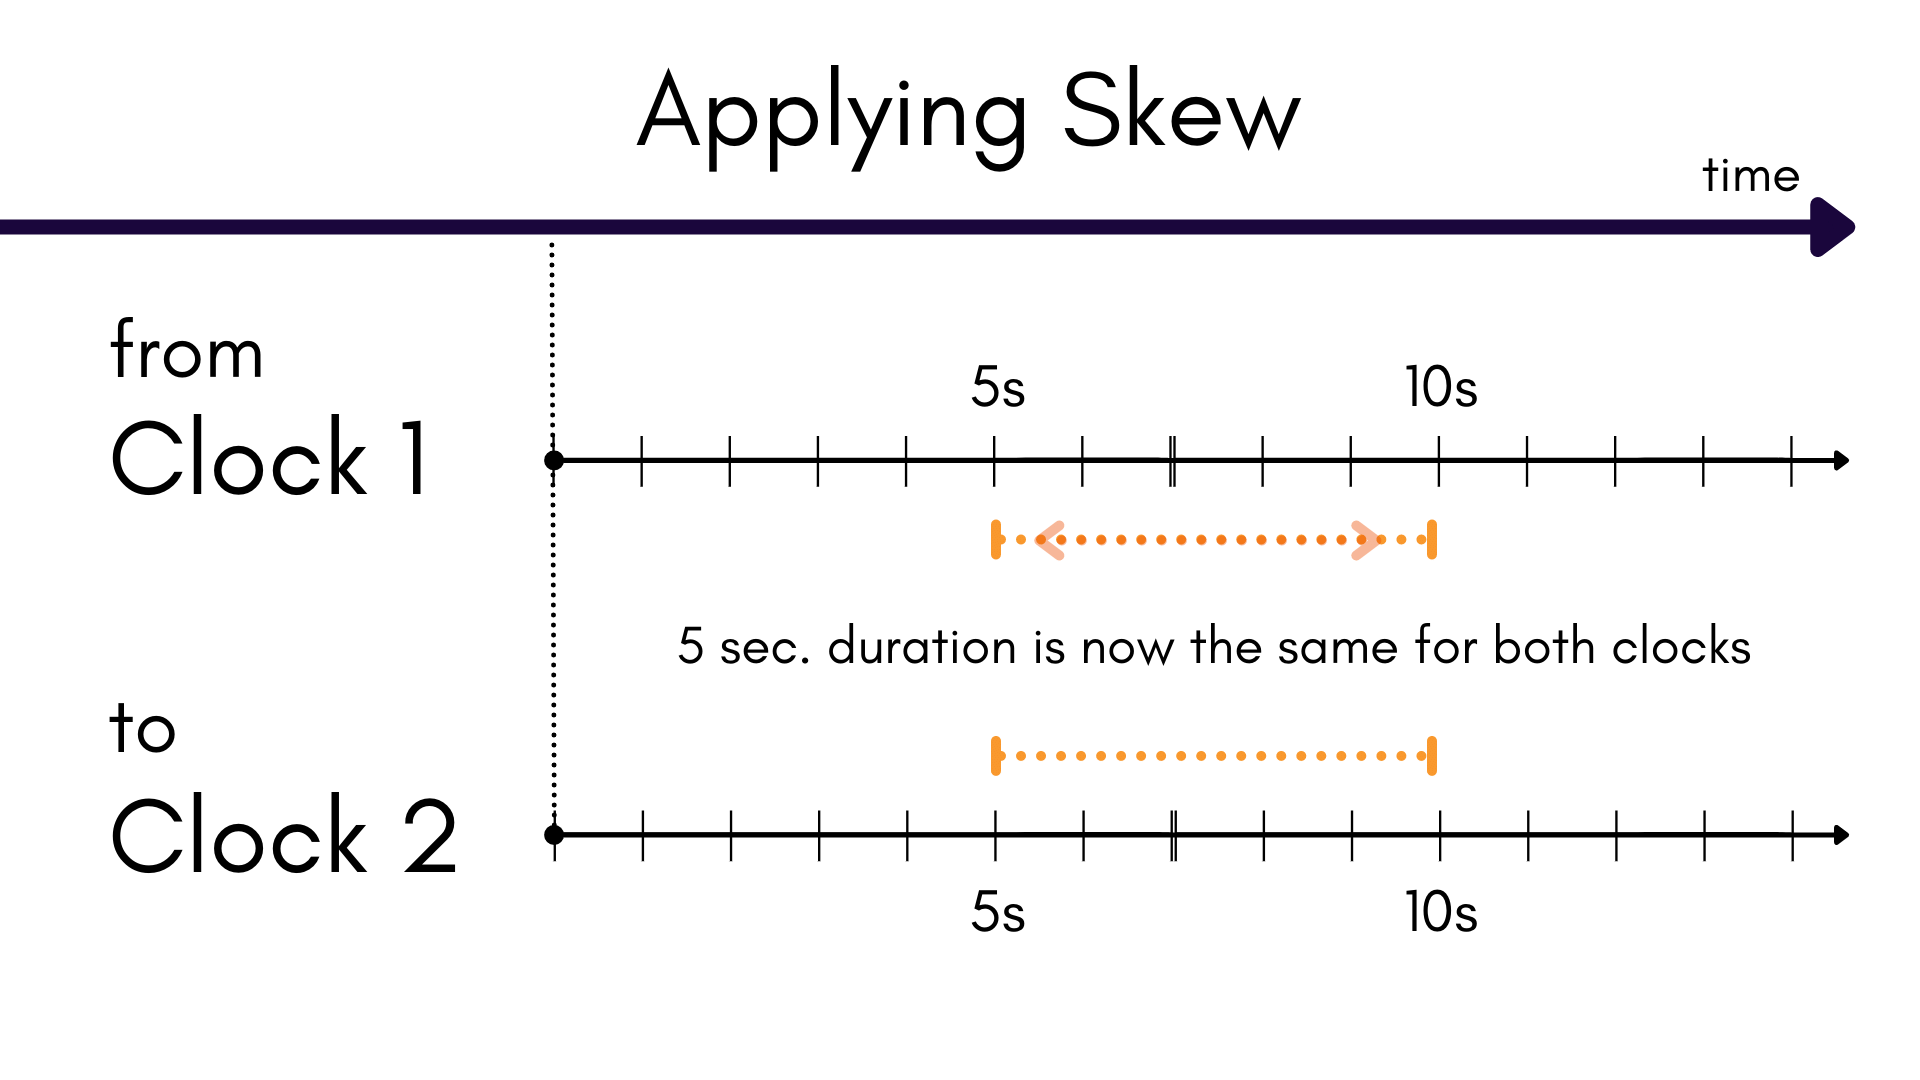 Appplying skew to a clock